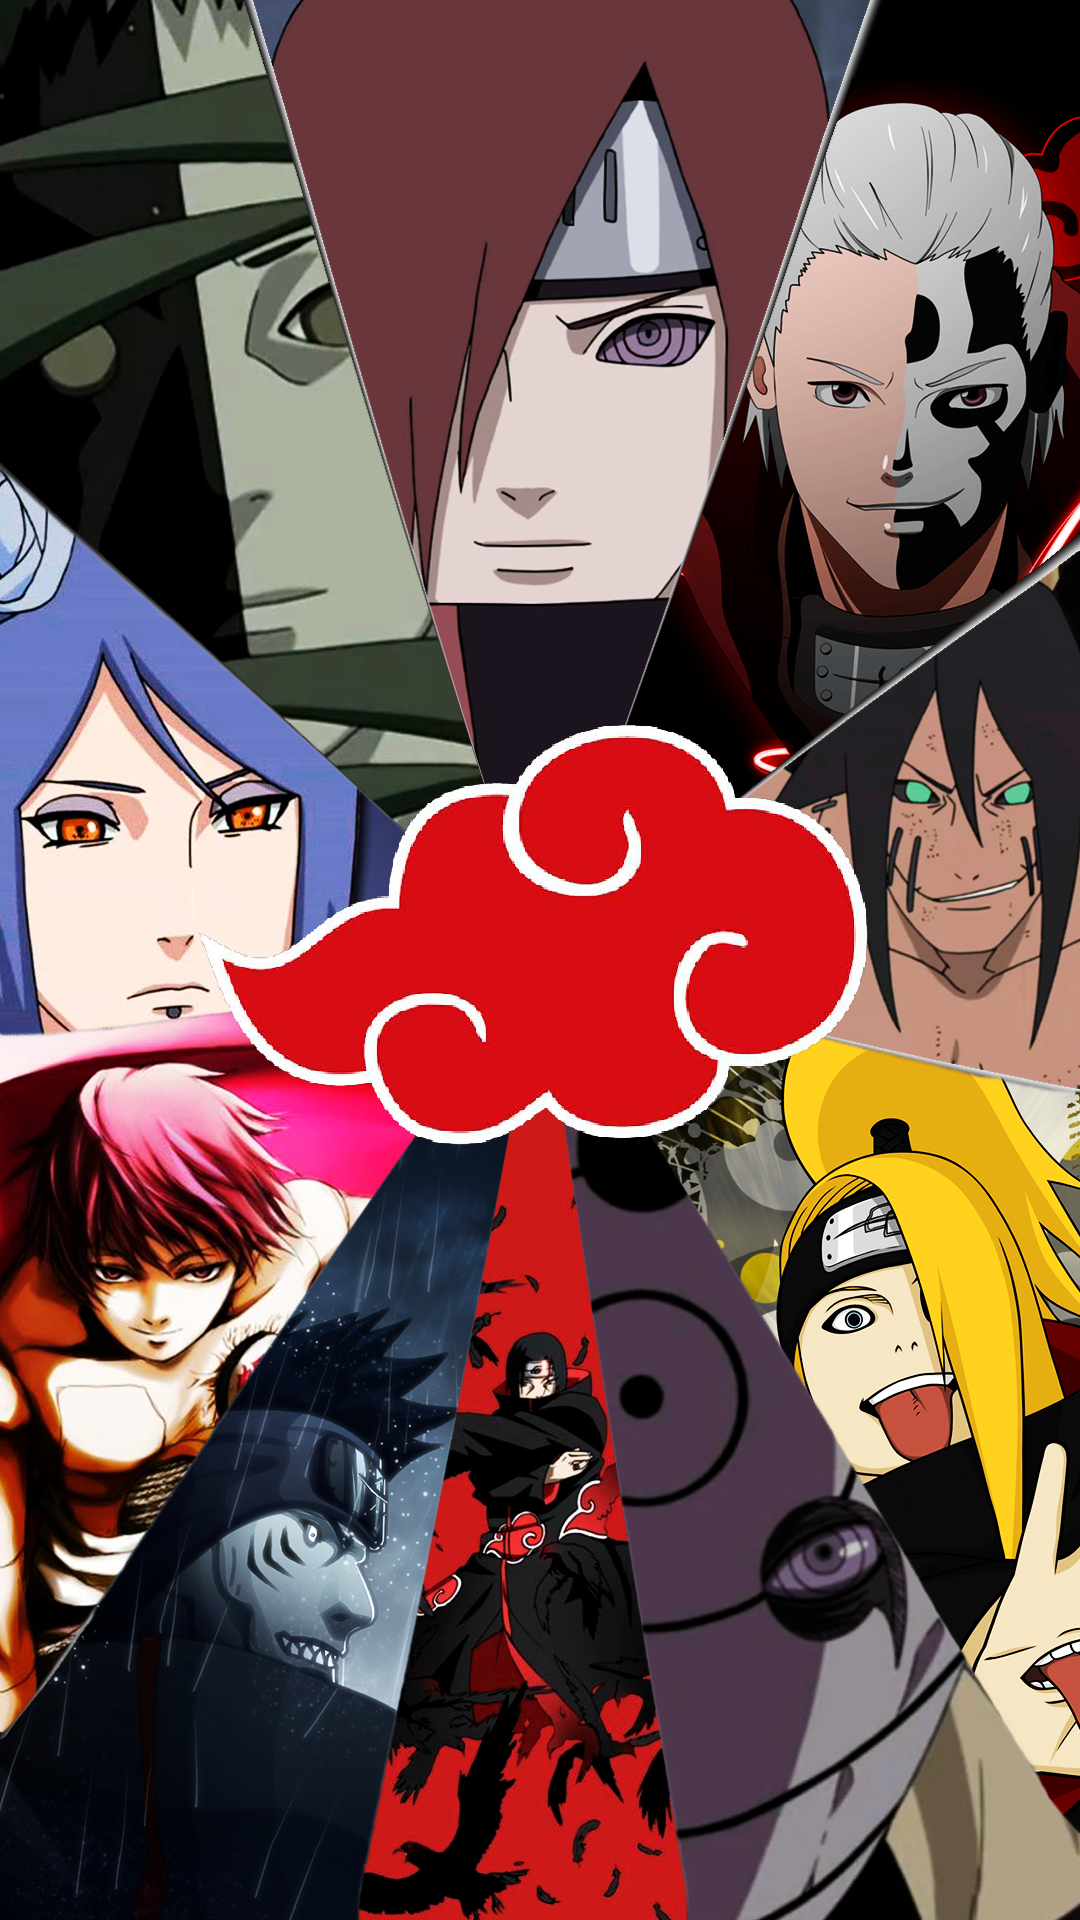 1080x1920 Akatsuki membros wallpaper | Anime akatsuki, Naruto akatsuki funny, Akatsuki funny